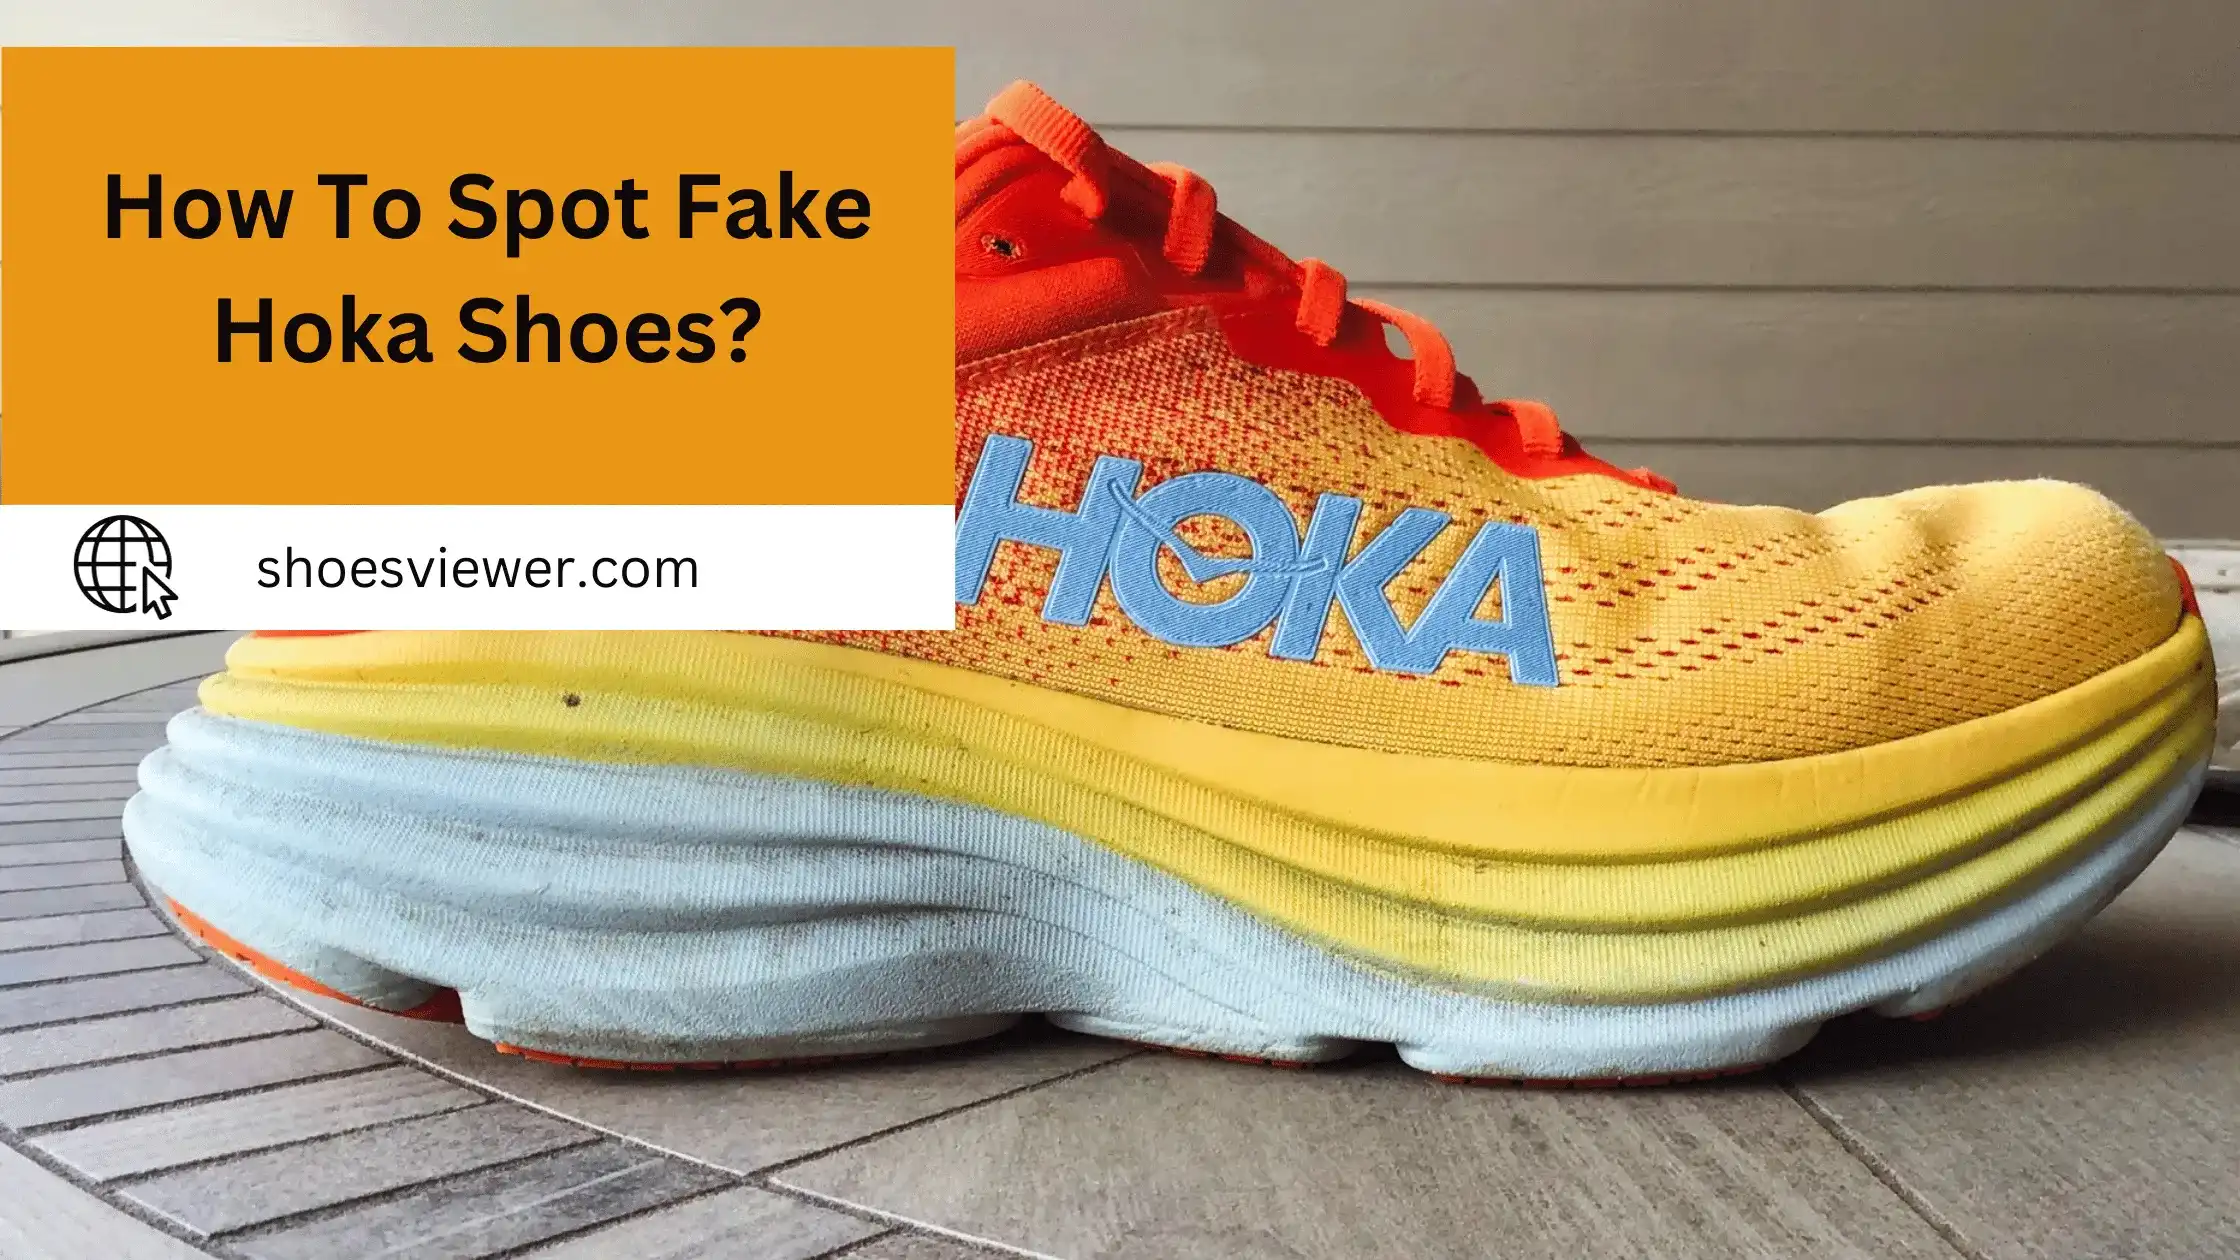 How To Spot Fake Hoka Shoes? Detailed Information